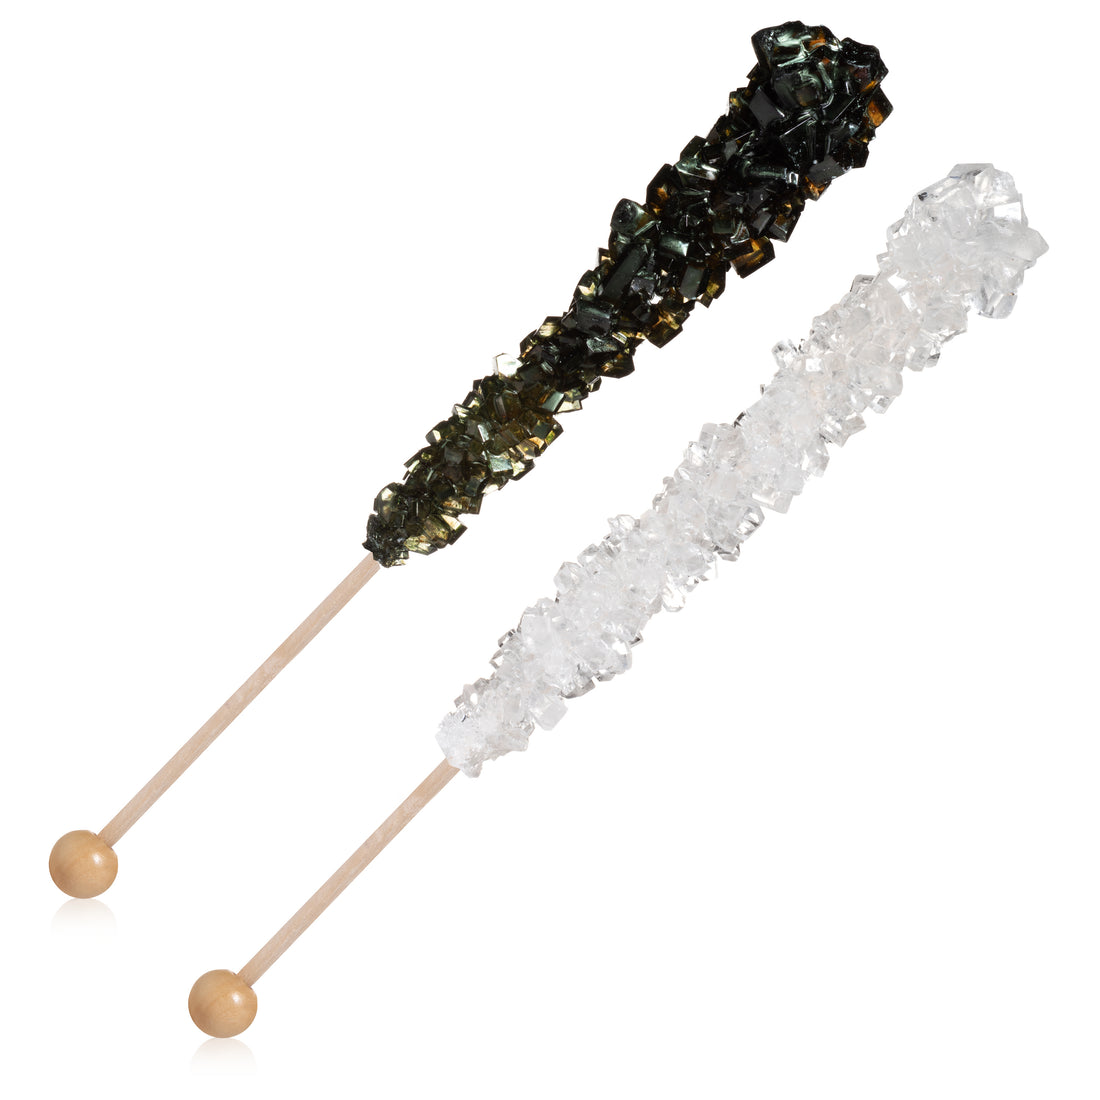 Black & White Rock Candy Crystal Sticks - Black Cherry and Original Sugar Flavors